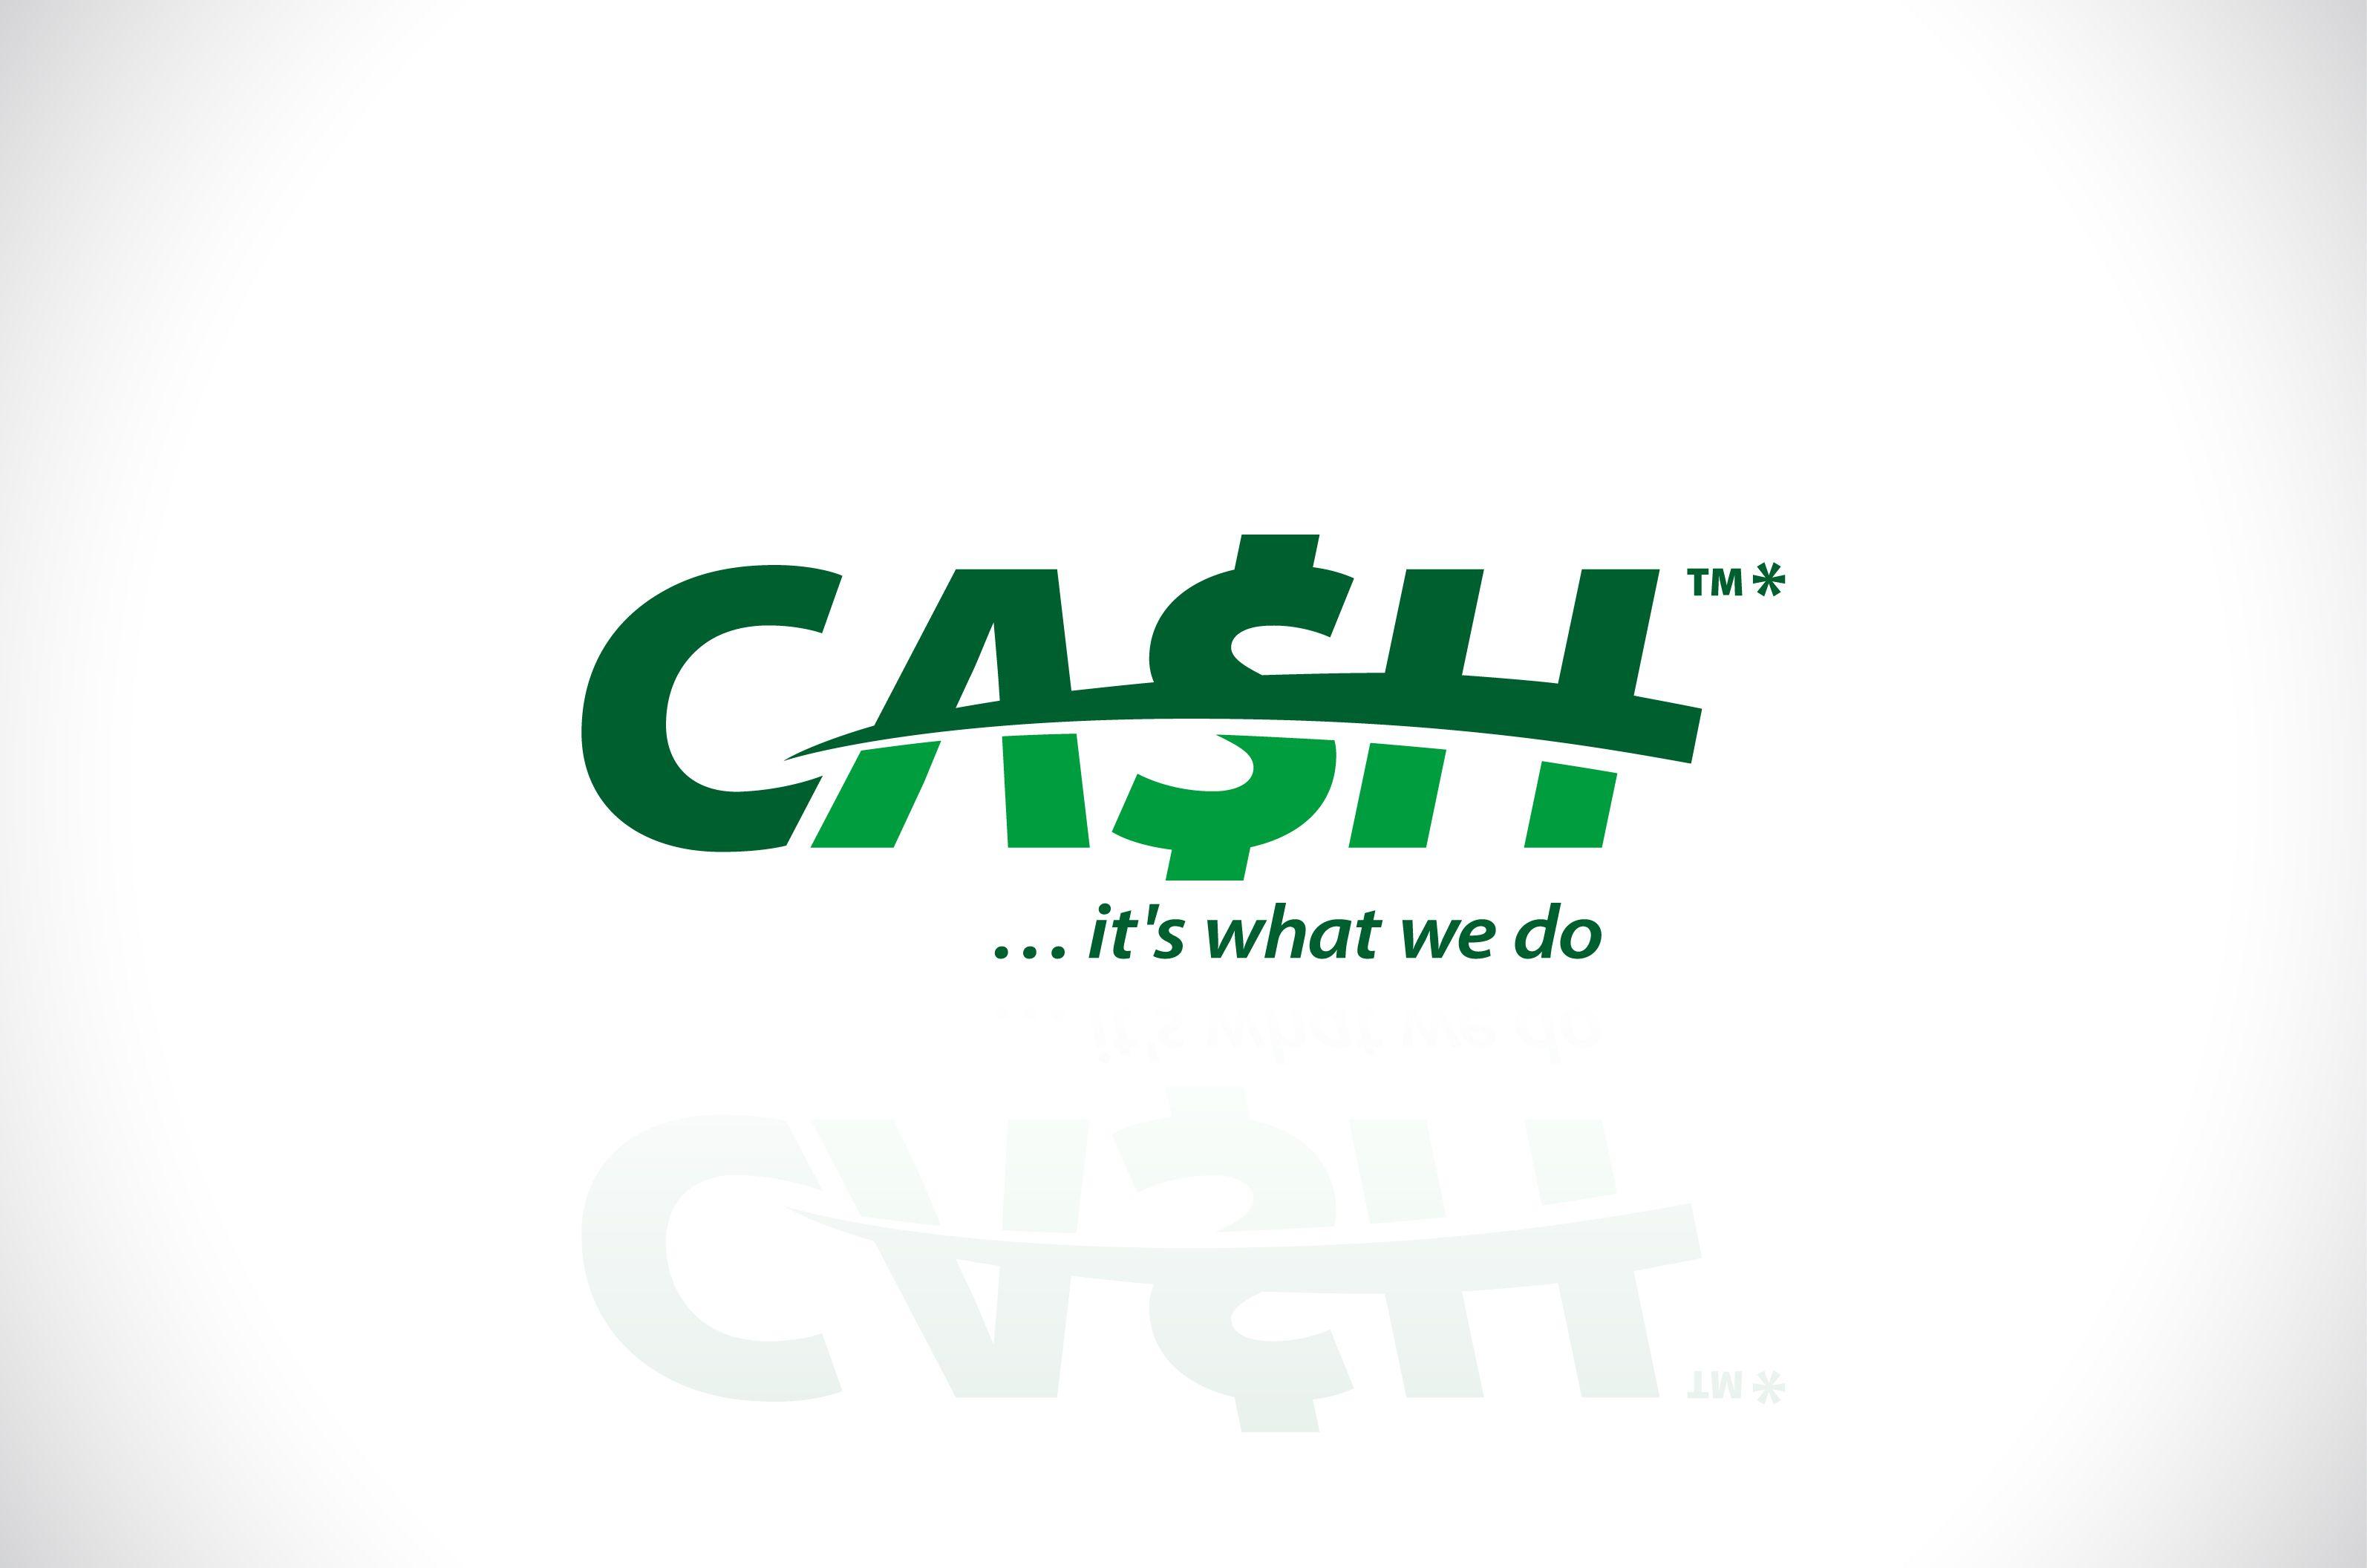 Cash -Only Logo - Cash Logo #design #branding #logo #marketing | 